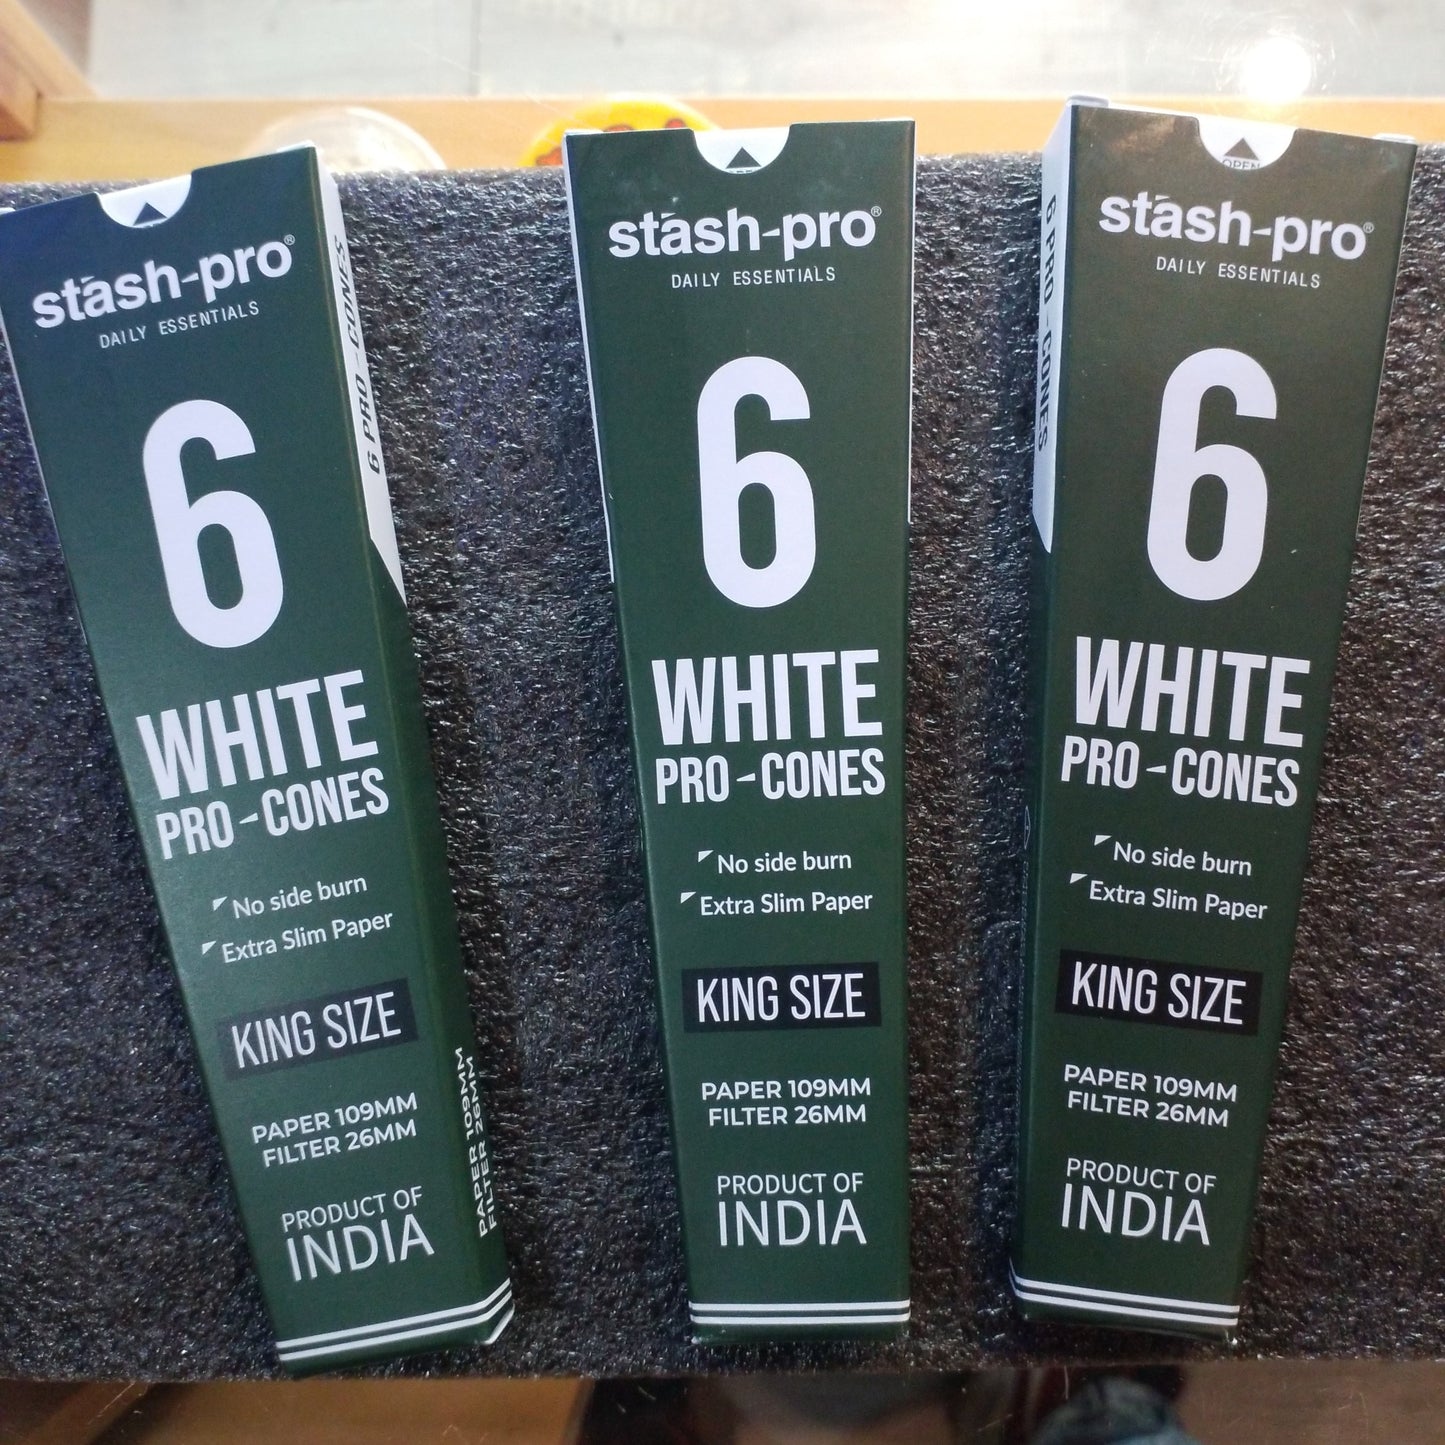 Caja de Conos Stash Pro Pack of 6 White